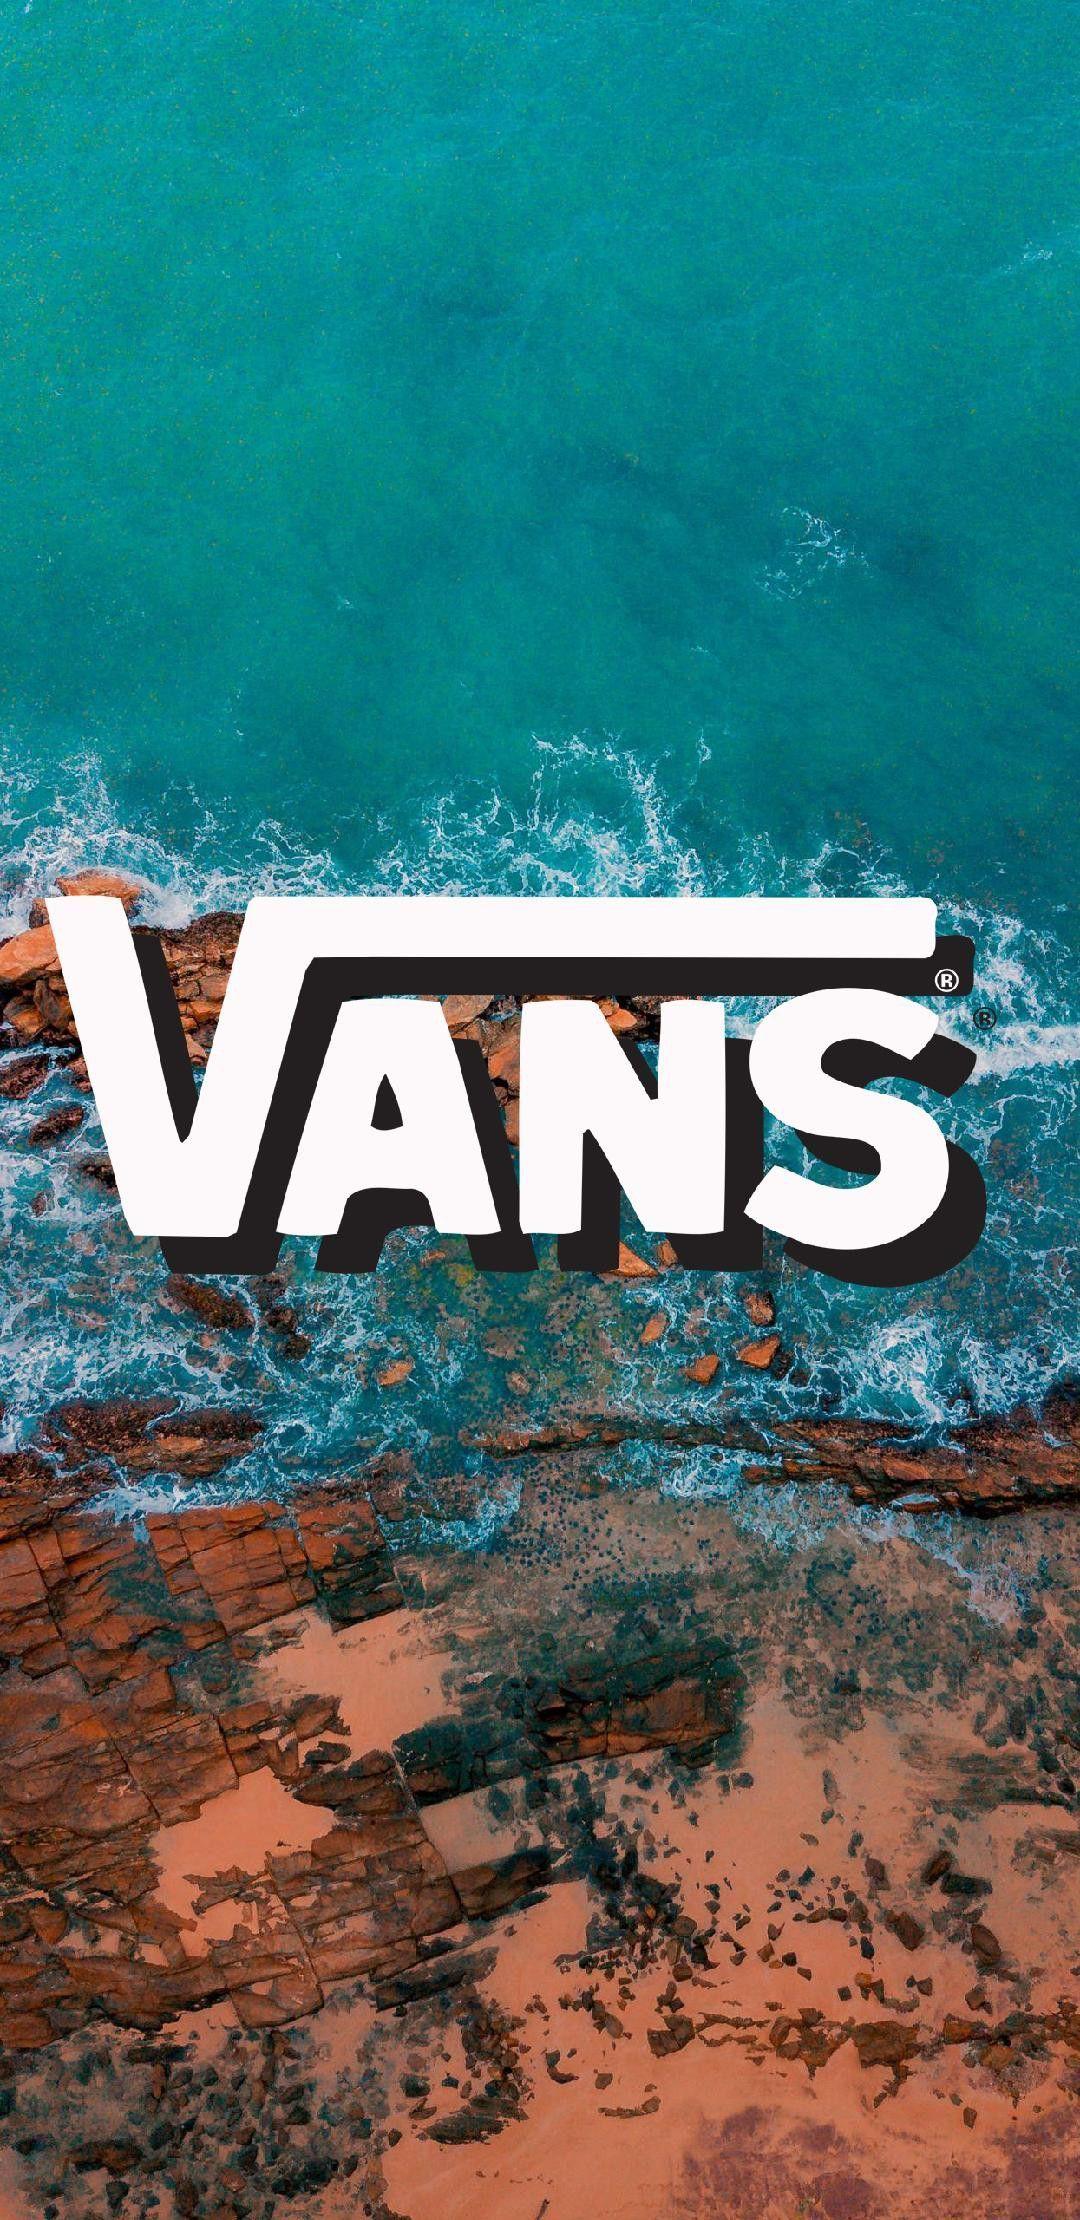 Cool Vans Wallpapers - Top Free Cool 